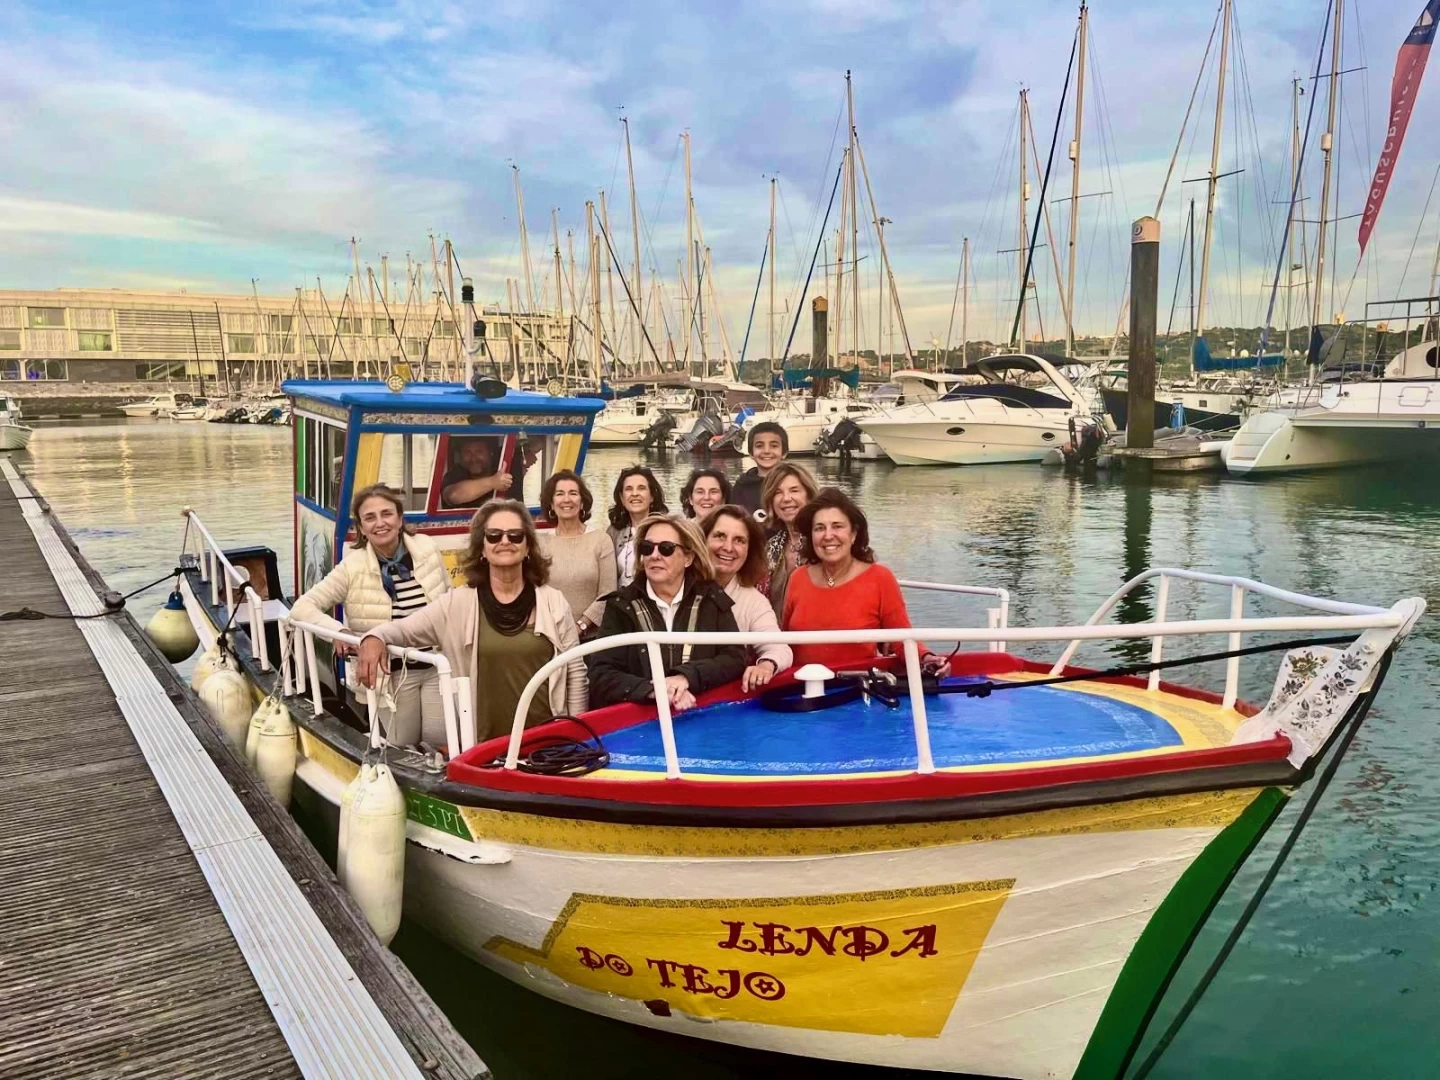 Lisbon: Typical wooden boat tour
